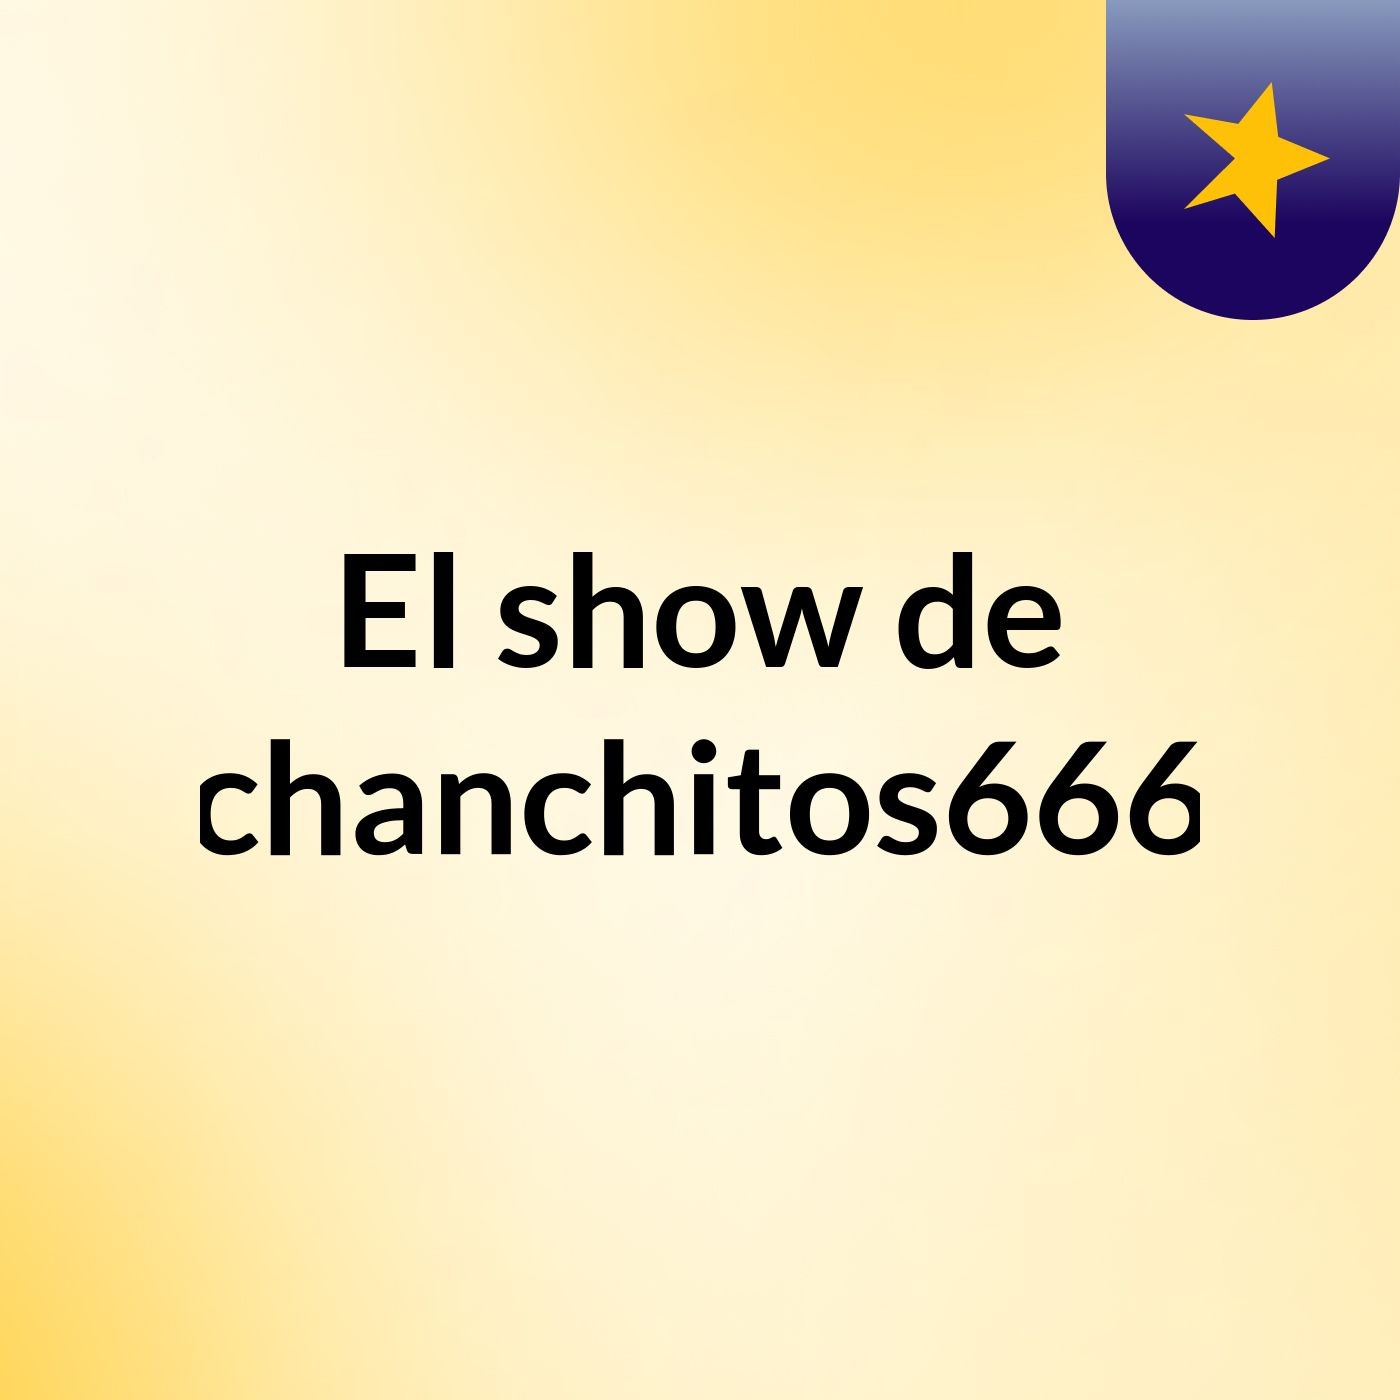 El show de chanchitos666